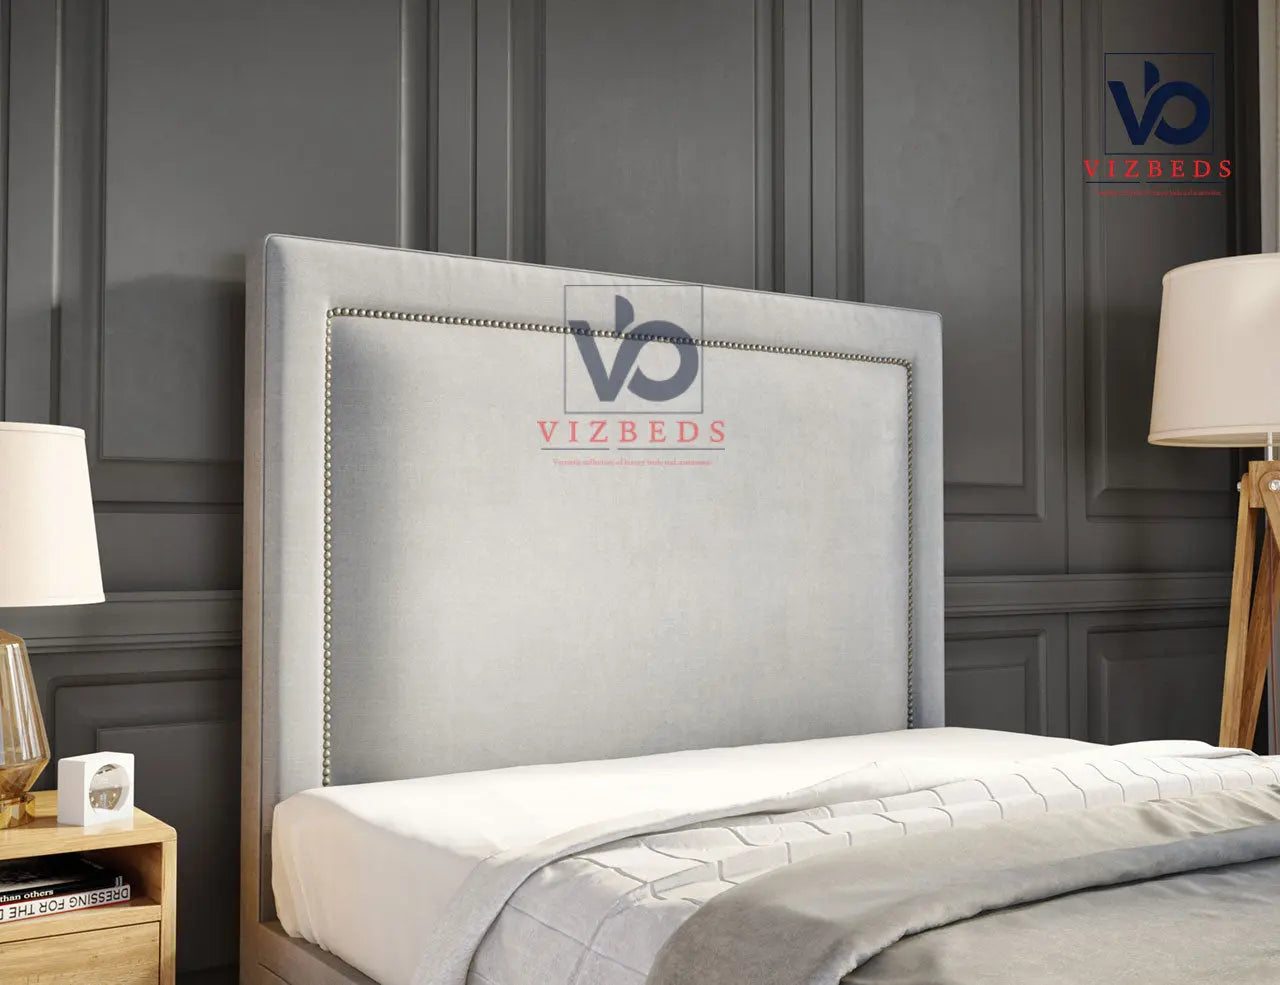 Luxury Queens Storage Ottoman Bed With Luxury Headboard